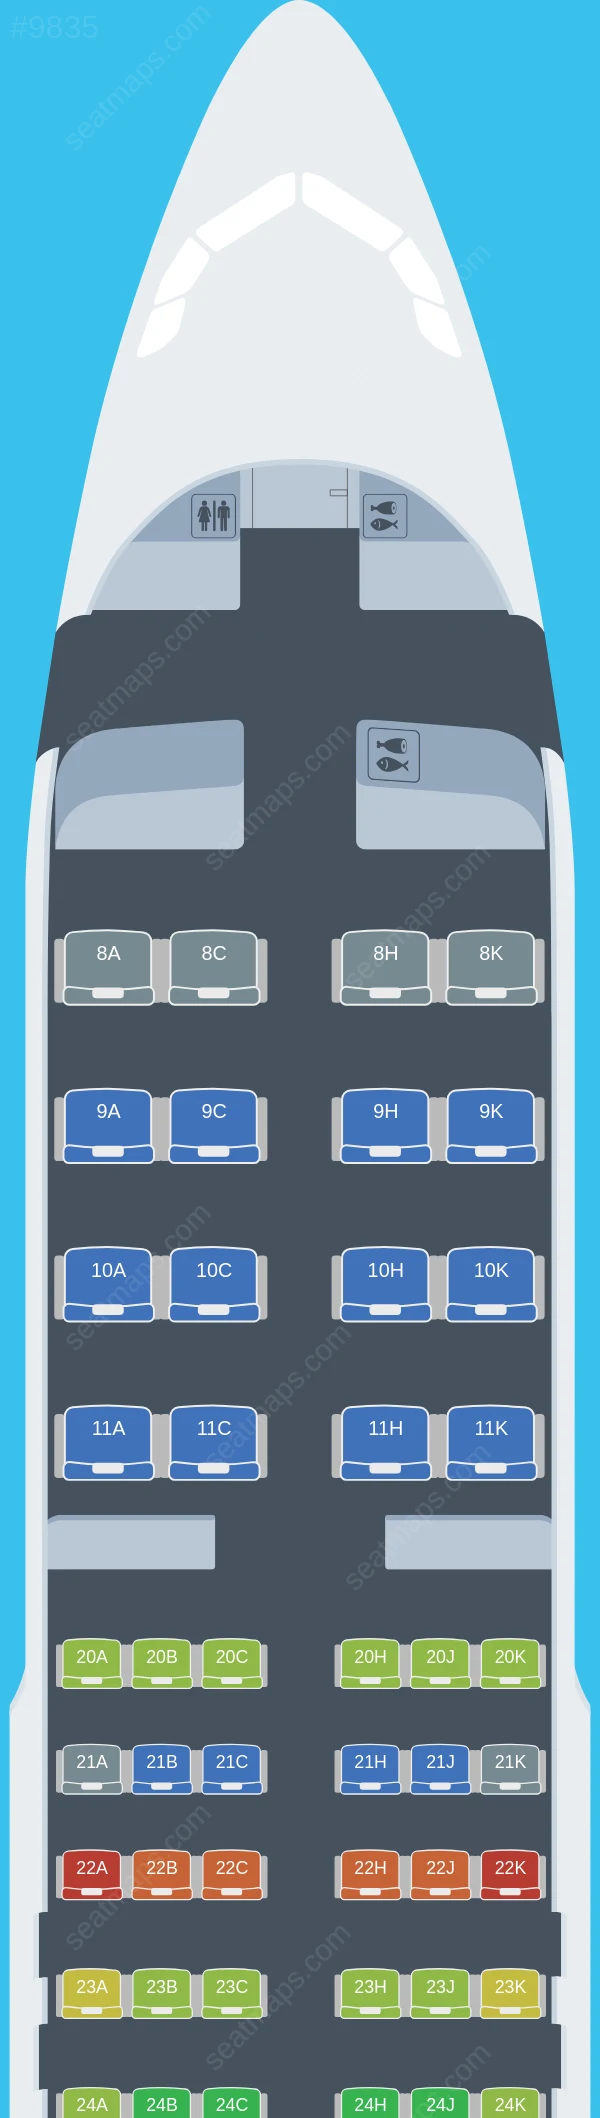 Egyptair Airbus A320neo seatmap preview